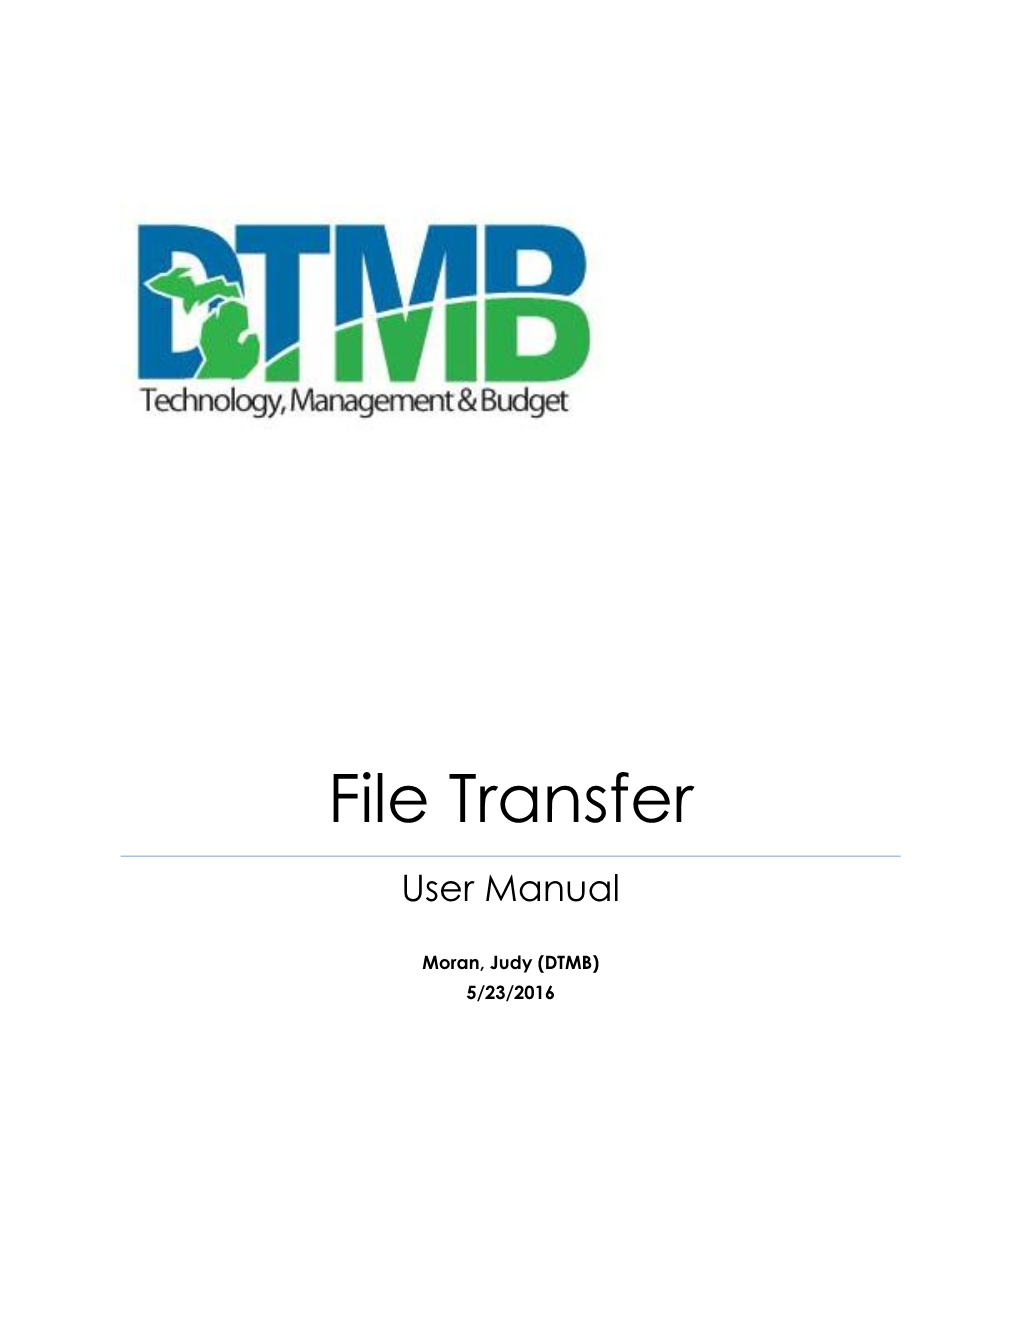 File Transfer User Manual